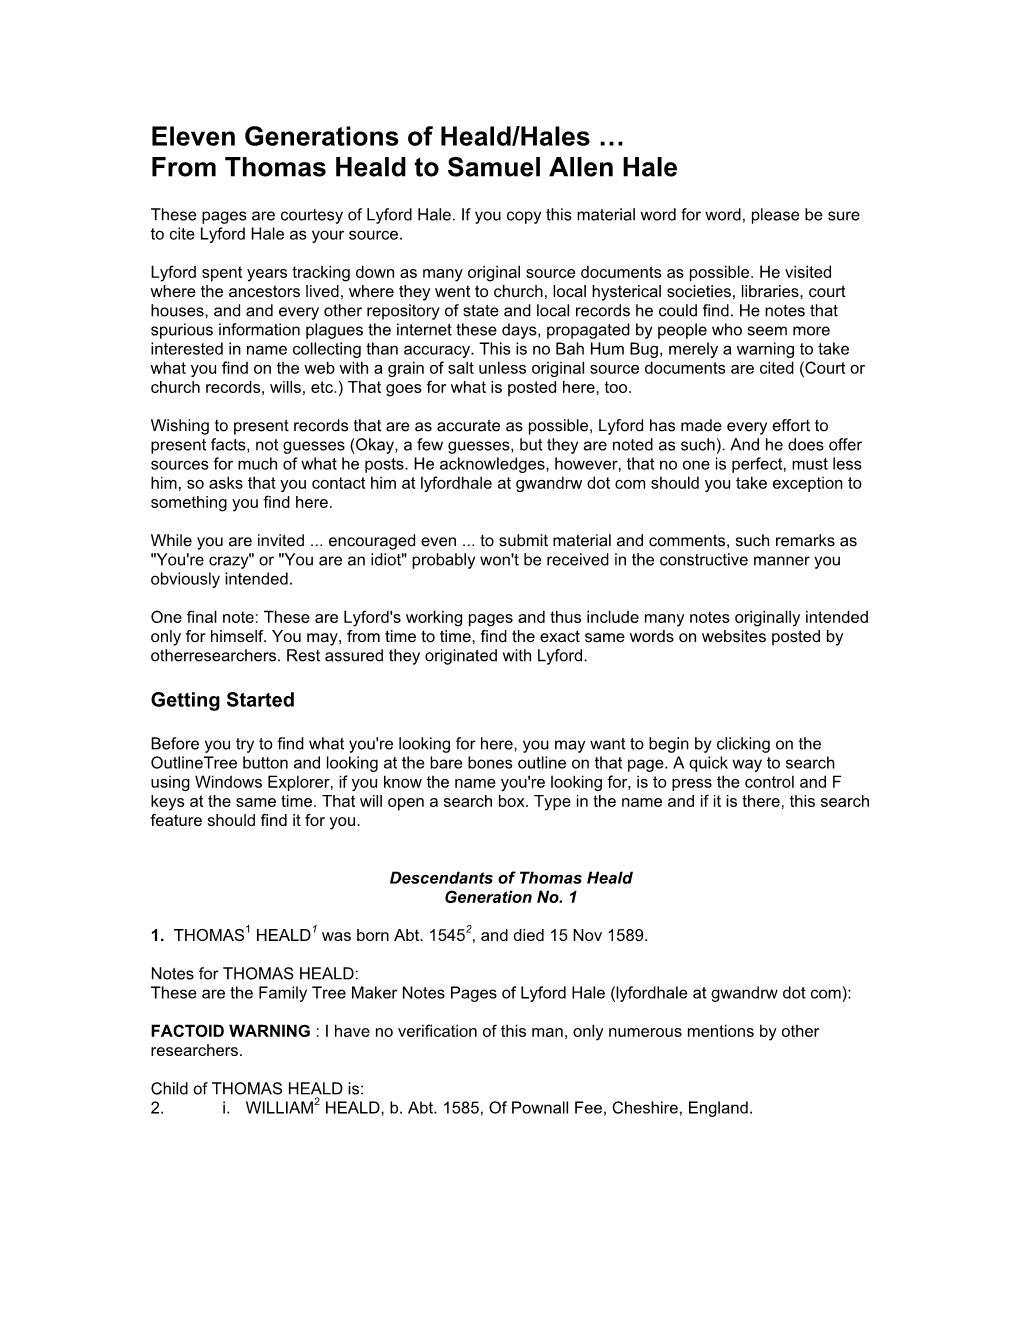 Eleven Generations of Heald/Hales … from Thomas Heald to Samuel Allen Hale